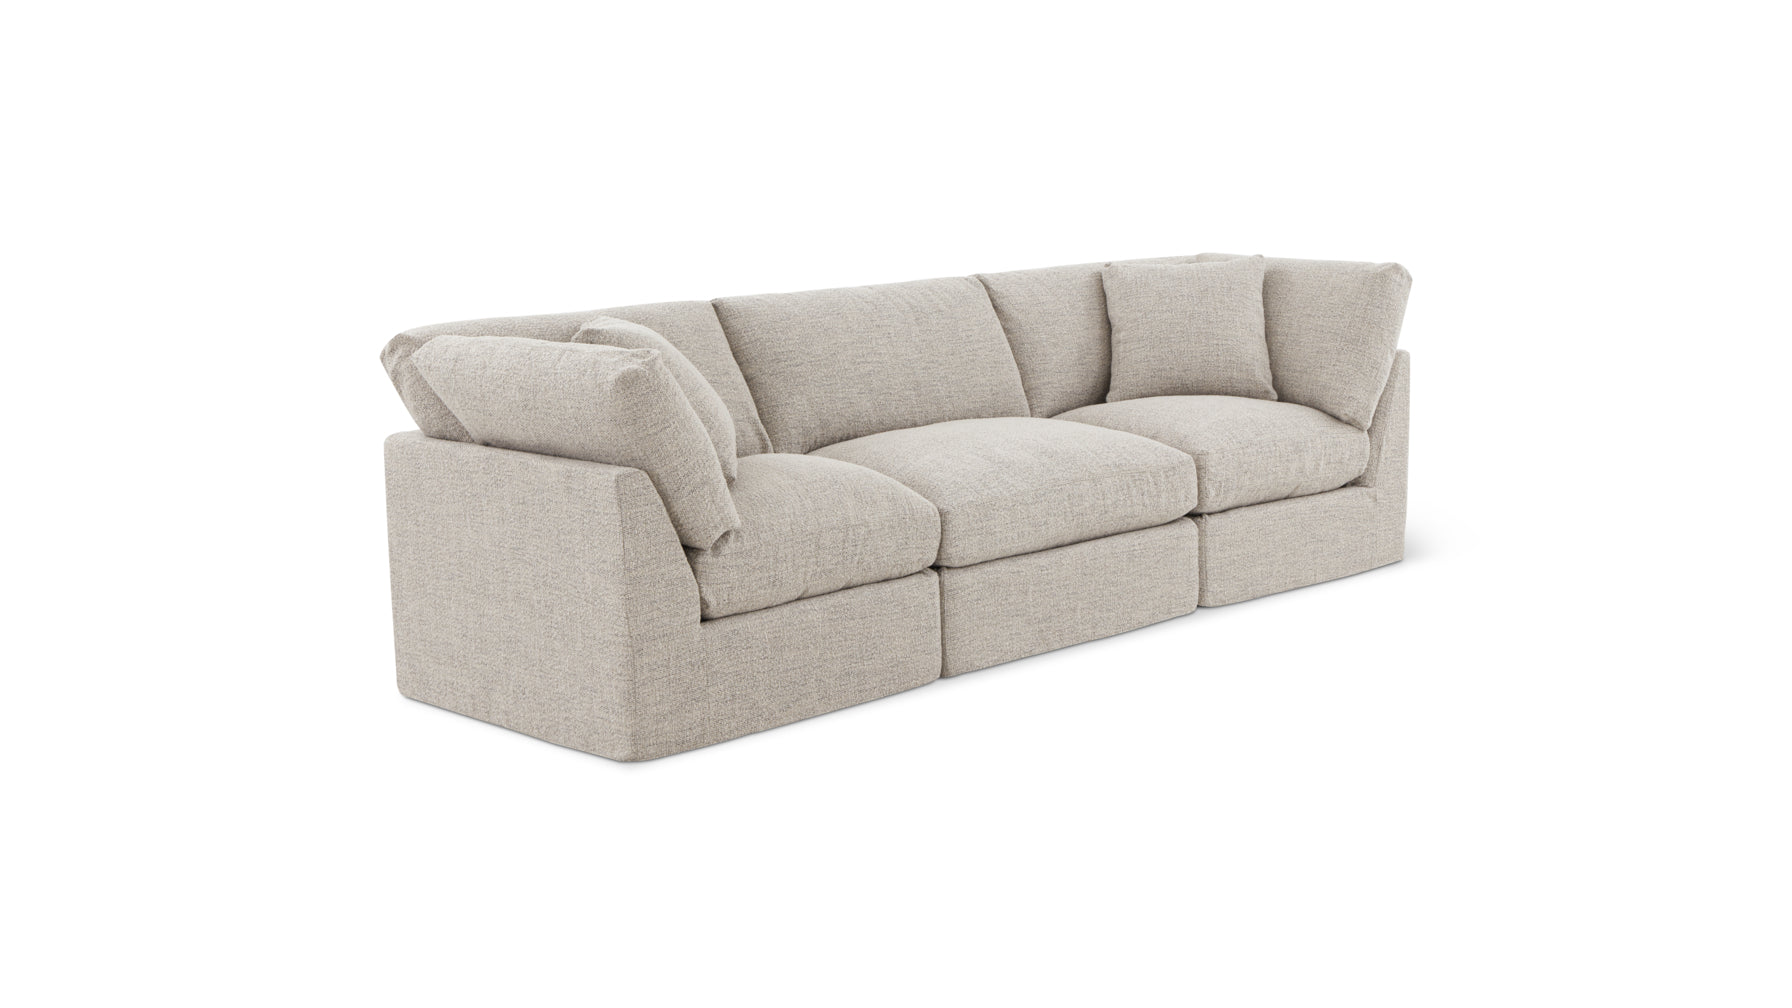 Get Together™ 3-Piece Modular Sofa, Standard, Oatmeal - Image 2